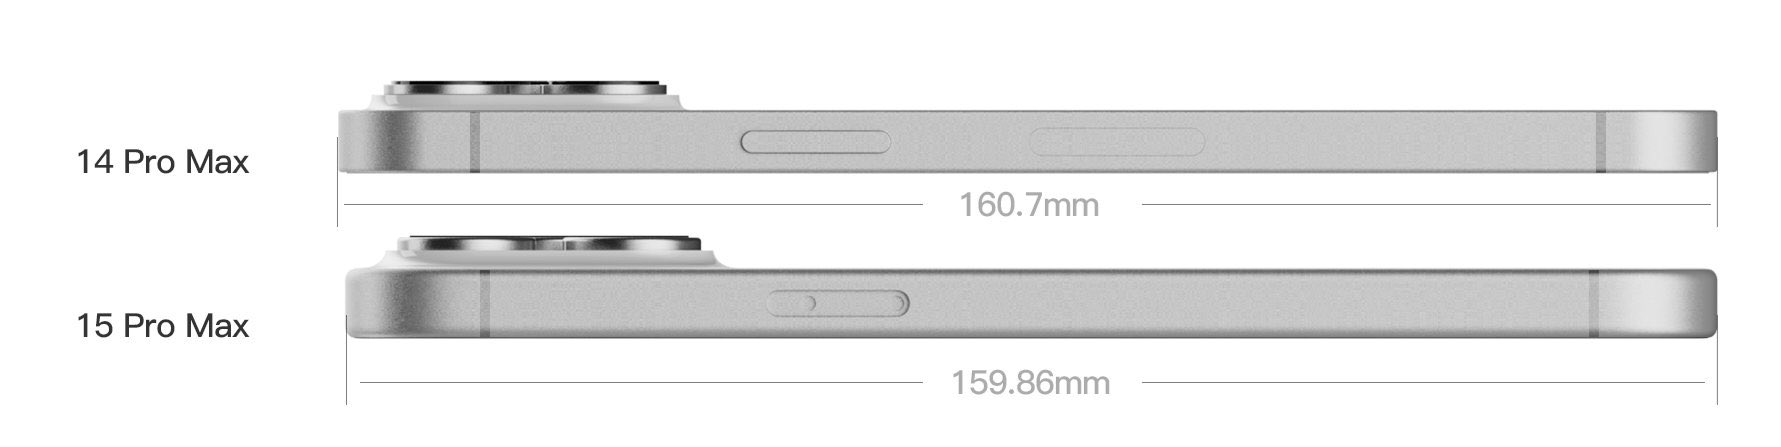 iPhone 15 Pro Max vs iPhone 14 Pro Max